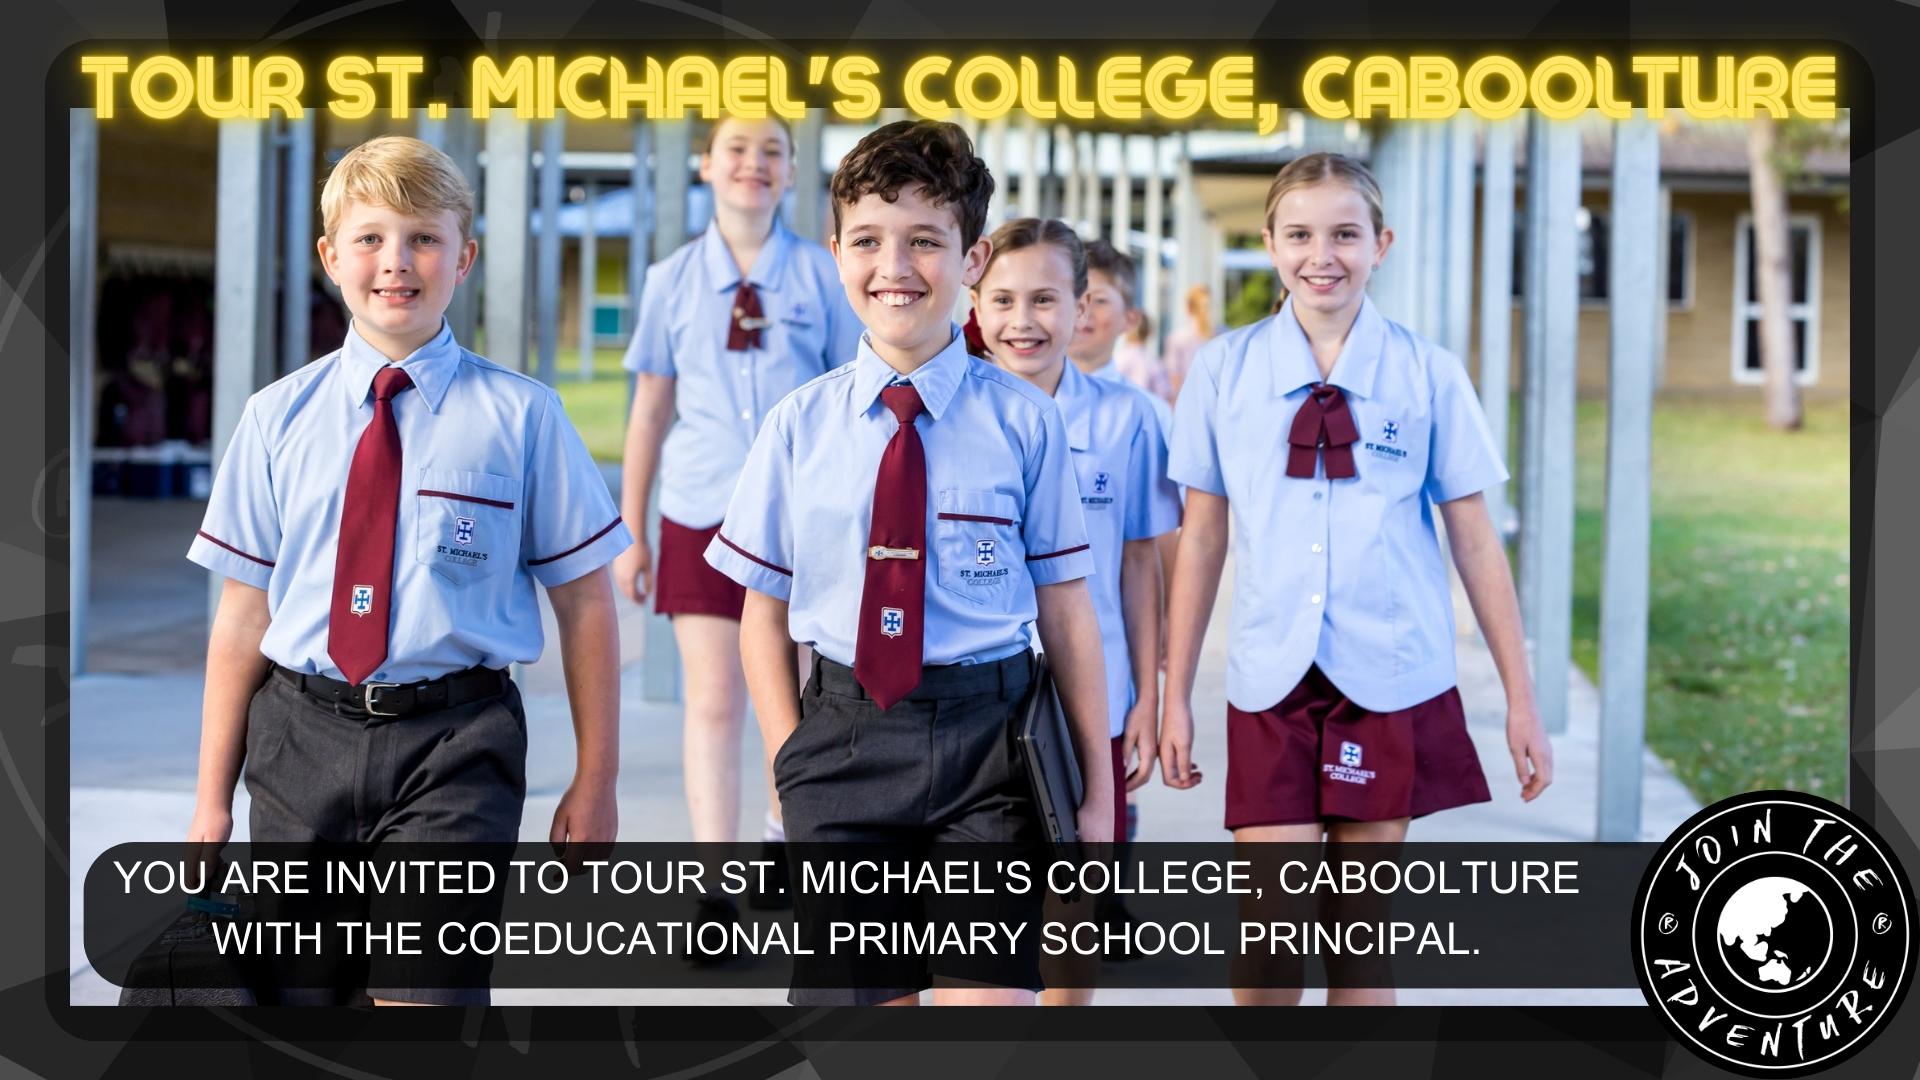 Tour St. Michael’s College, Caboolture